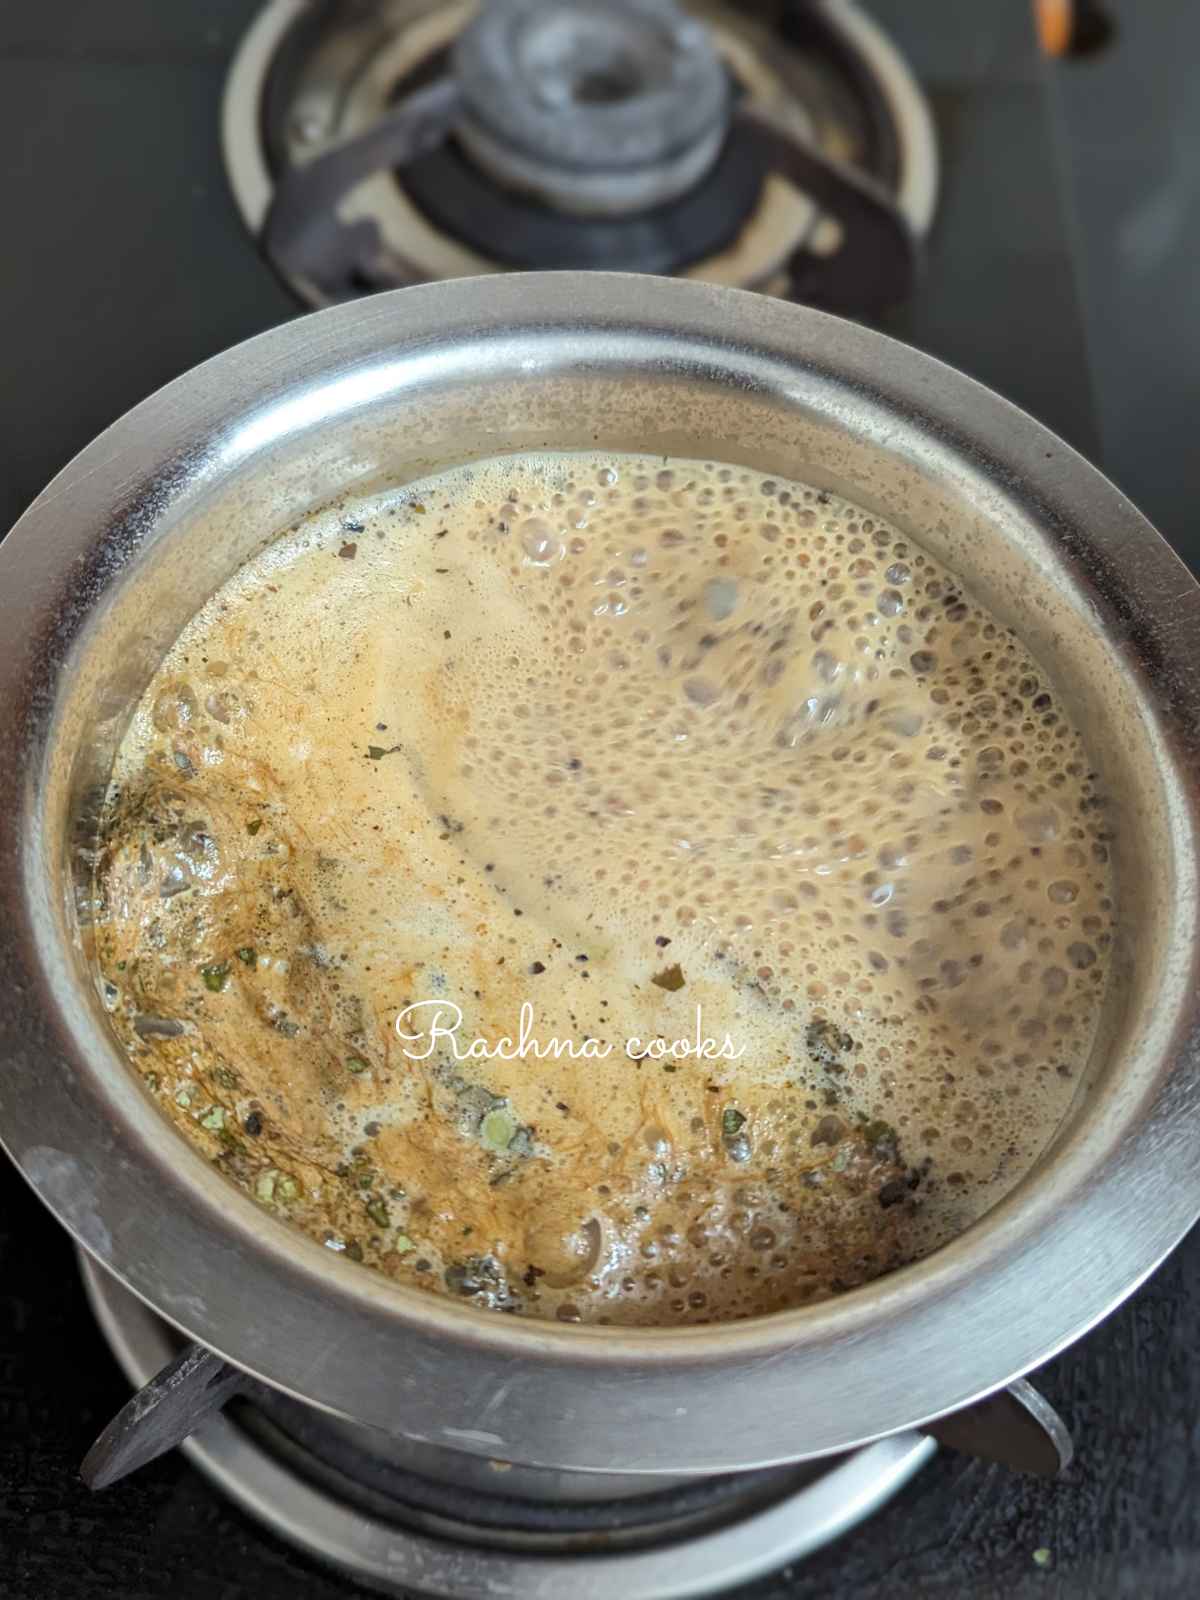 Boiling lemongrass tea after adding milk to it.